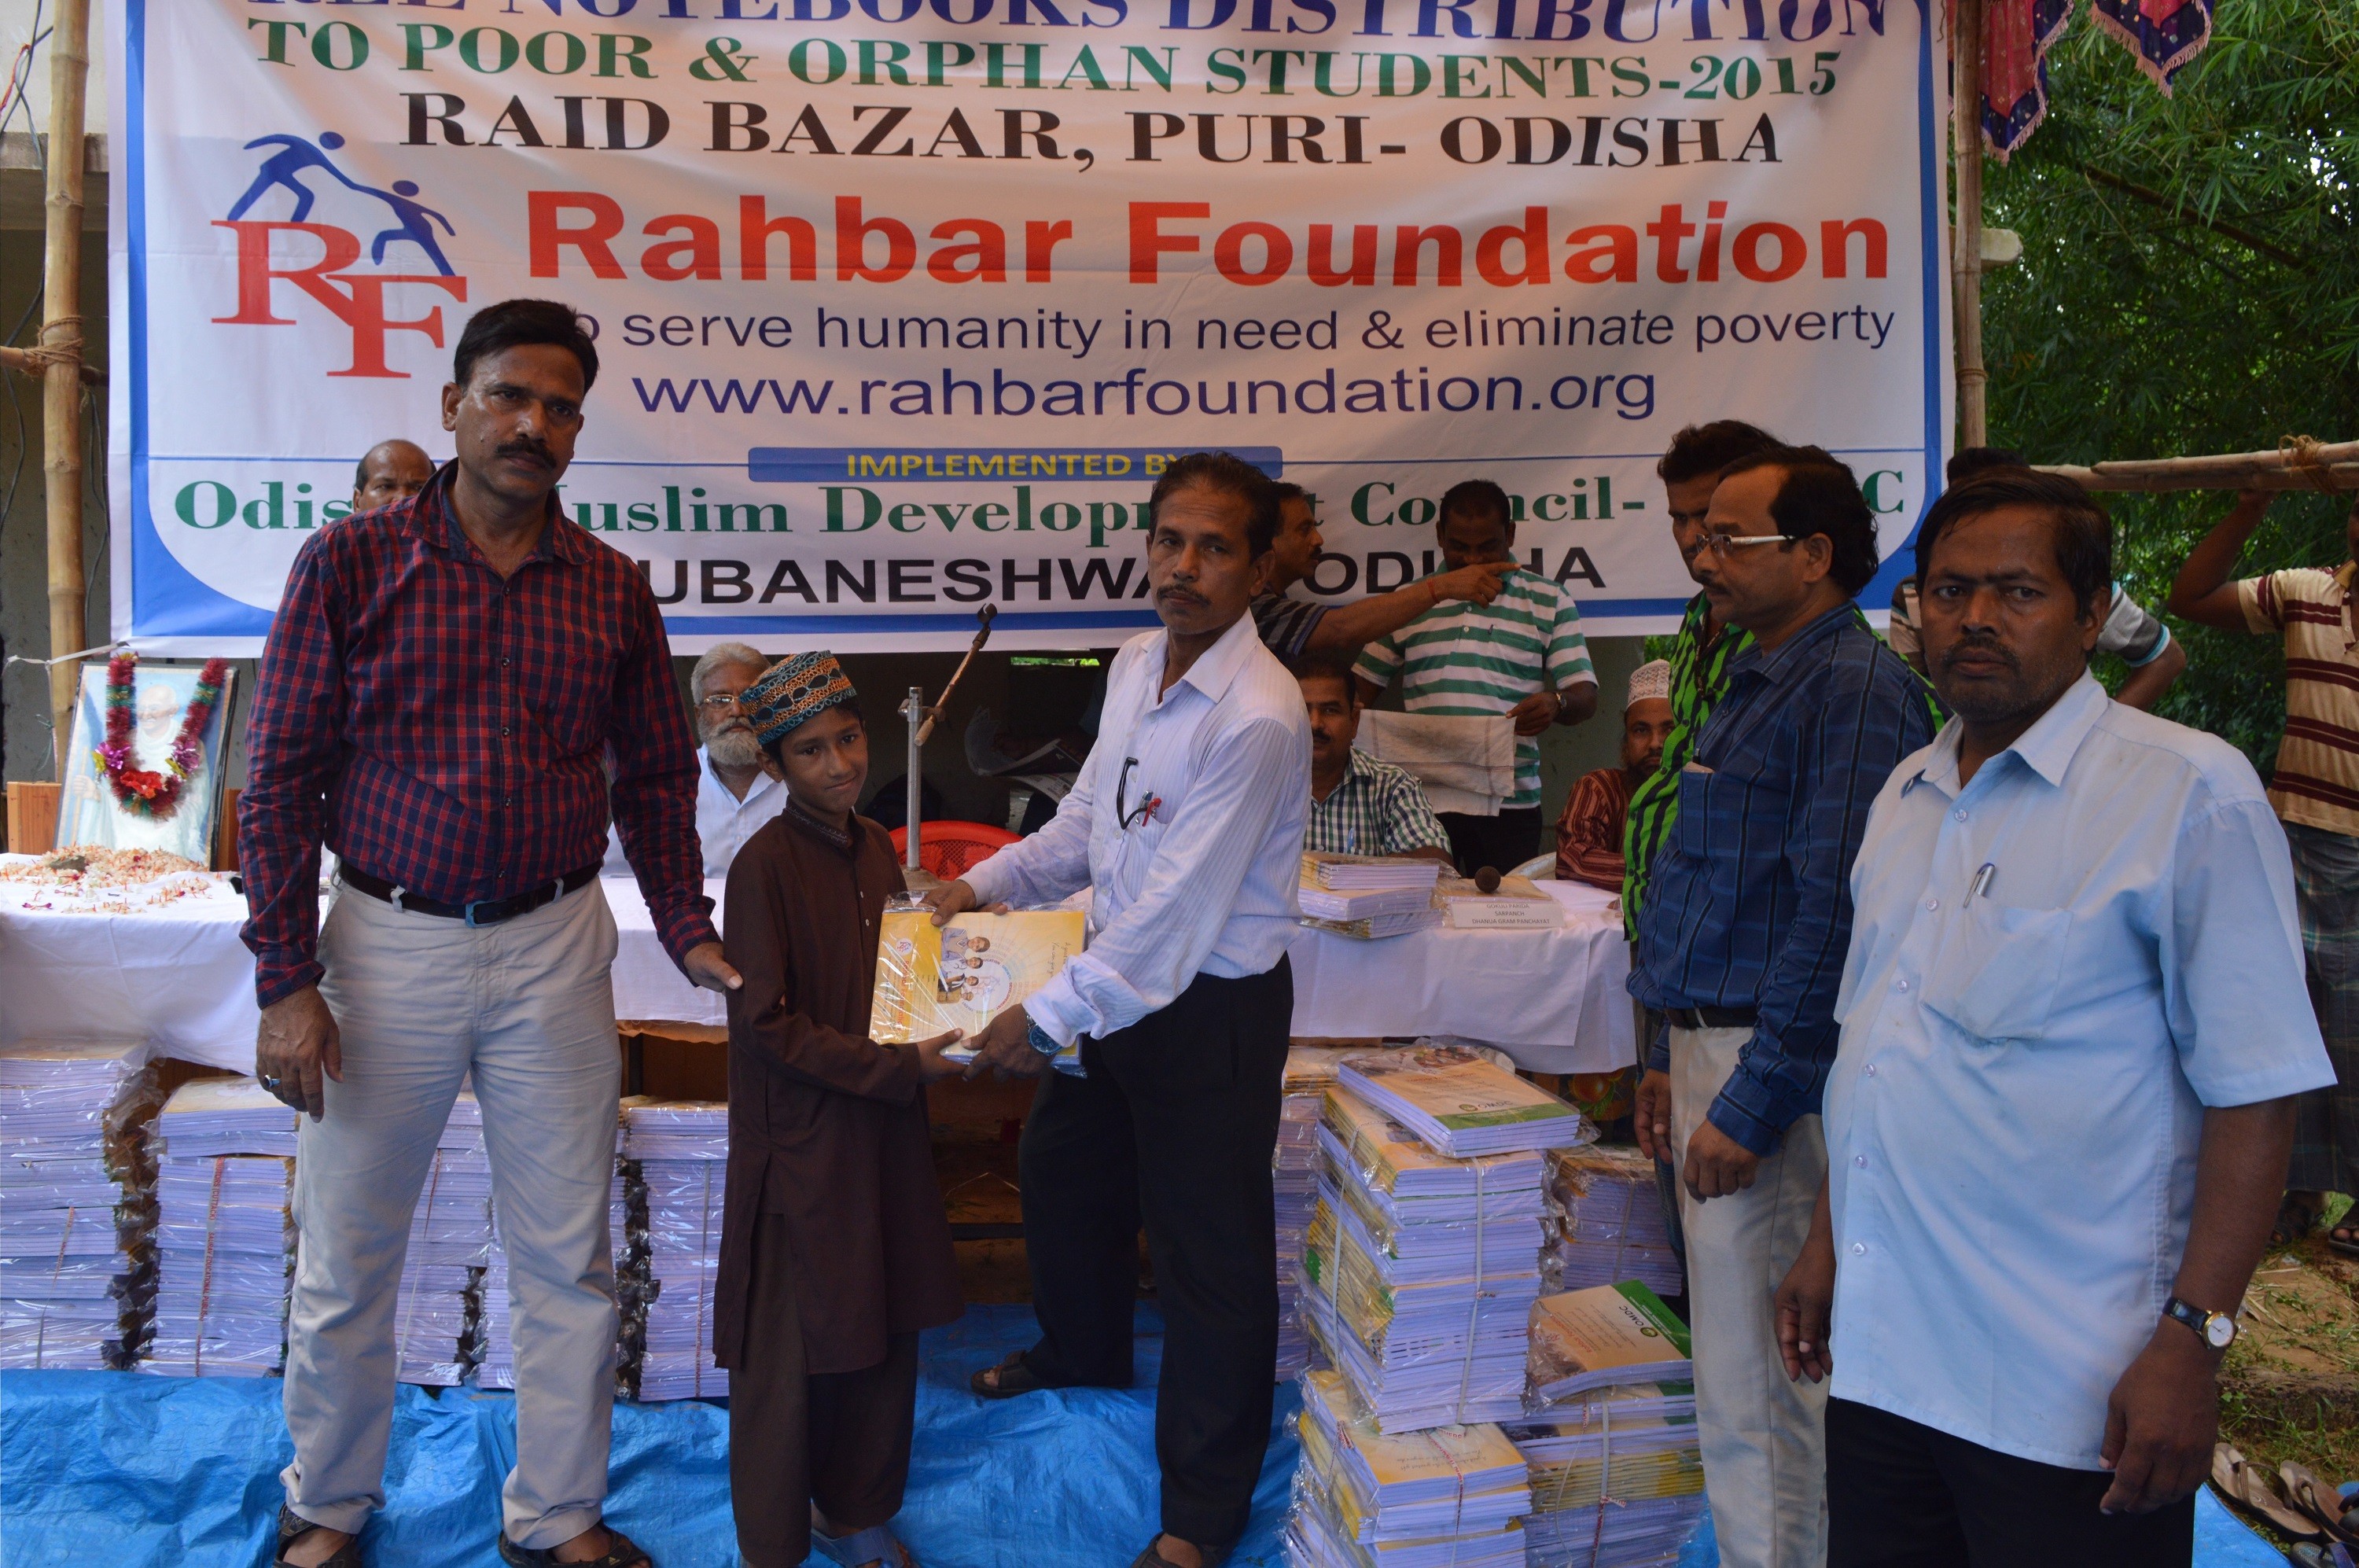 Free Notebooks distribution  at RaidBazar, Odisha